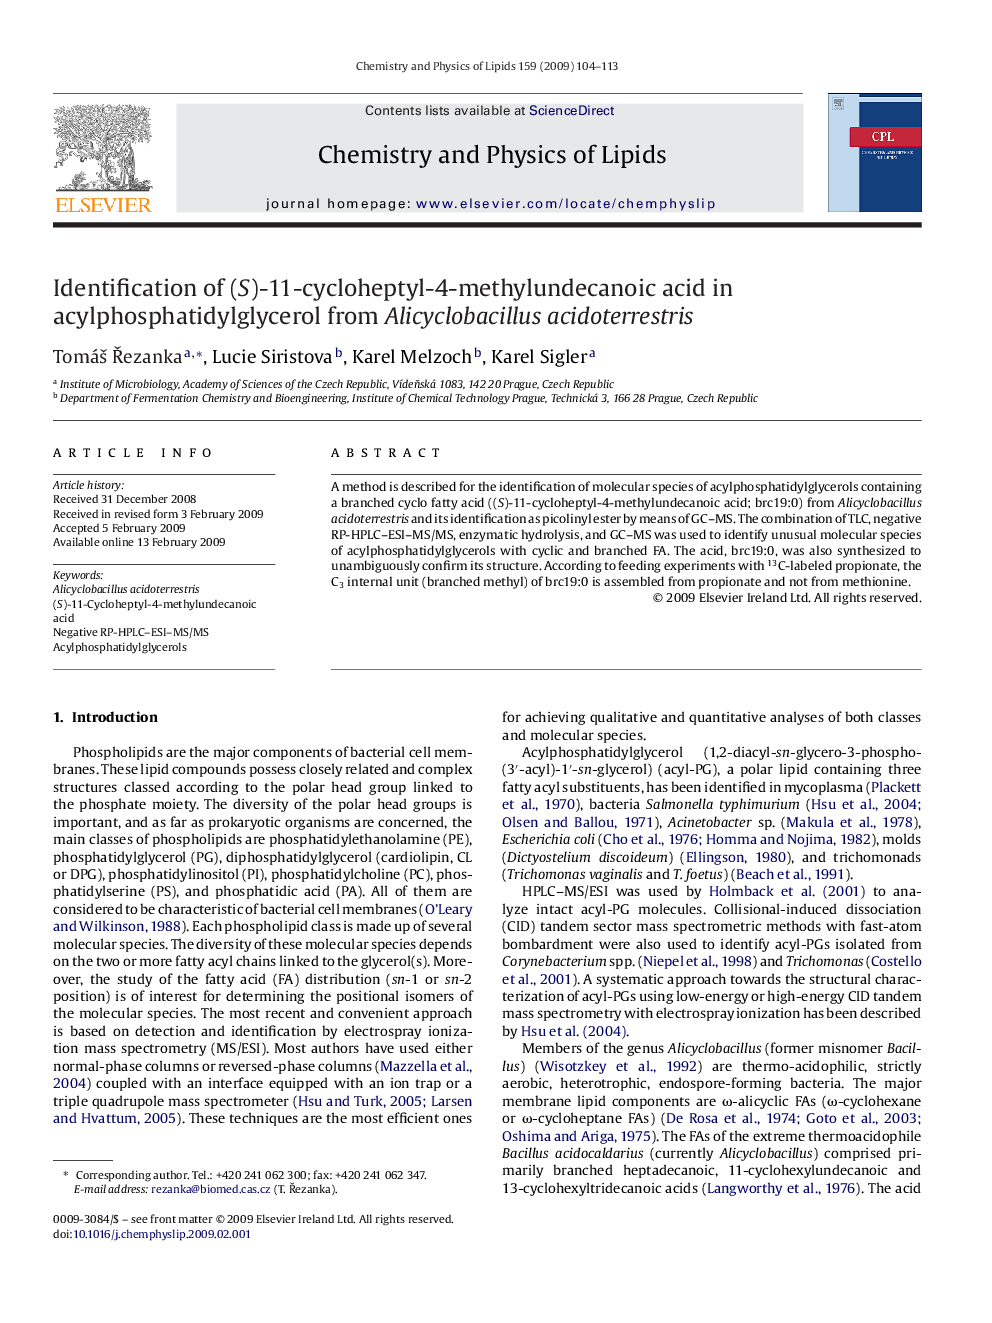 Identification of (S)-11-cycloheptyl-4-methylundecanoic acid in acylphosphatidylglycerol from Alicyclobacillus acidoterrestris